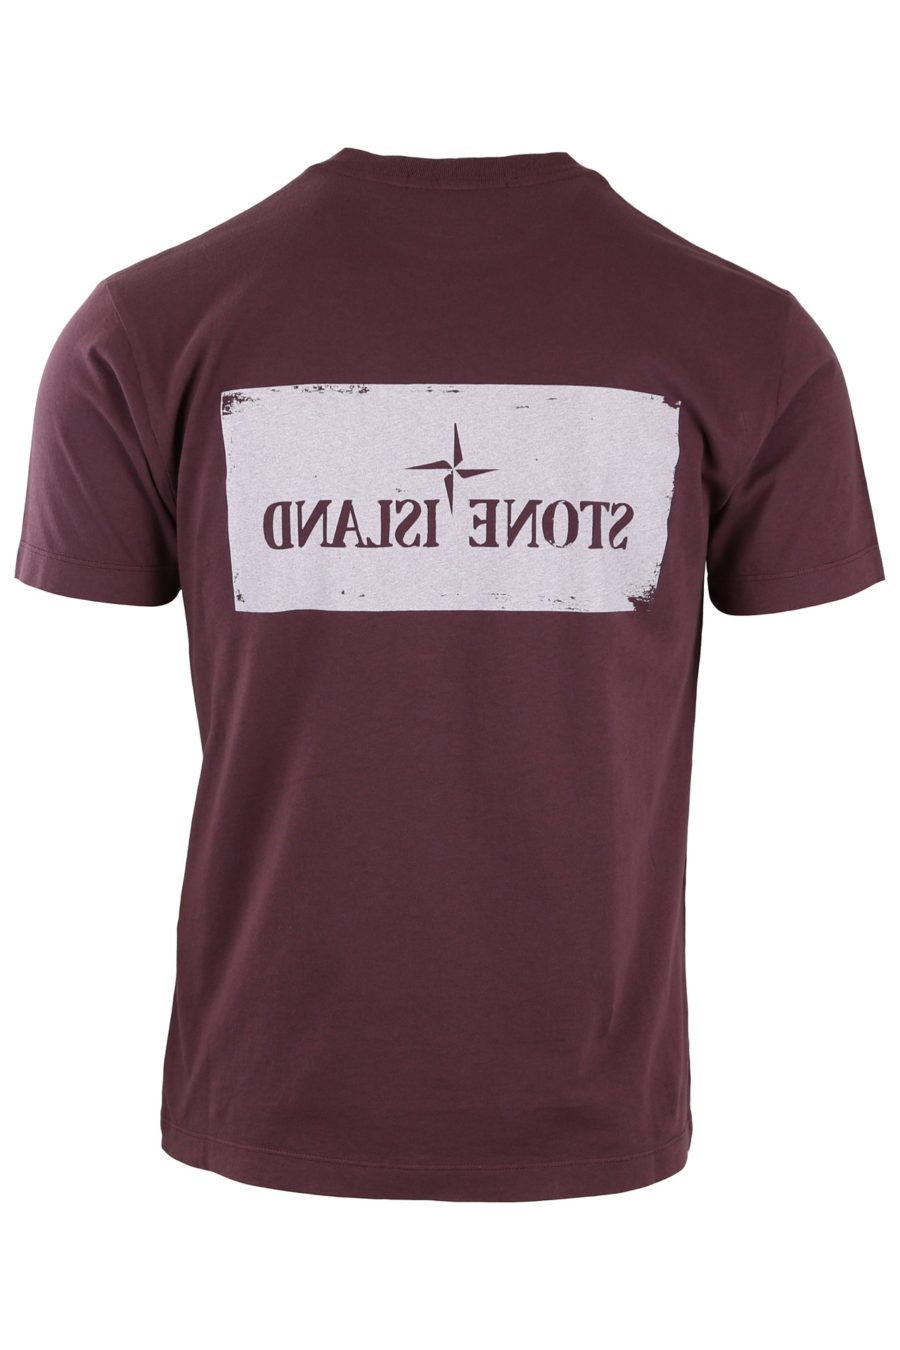 T-shirt Stone Island burgundy logo white - fdc1cd0f460d93cd830f3093410841232570a244